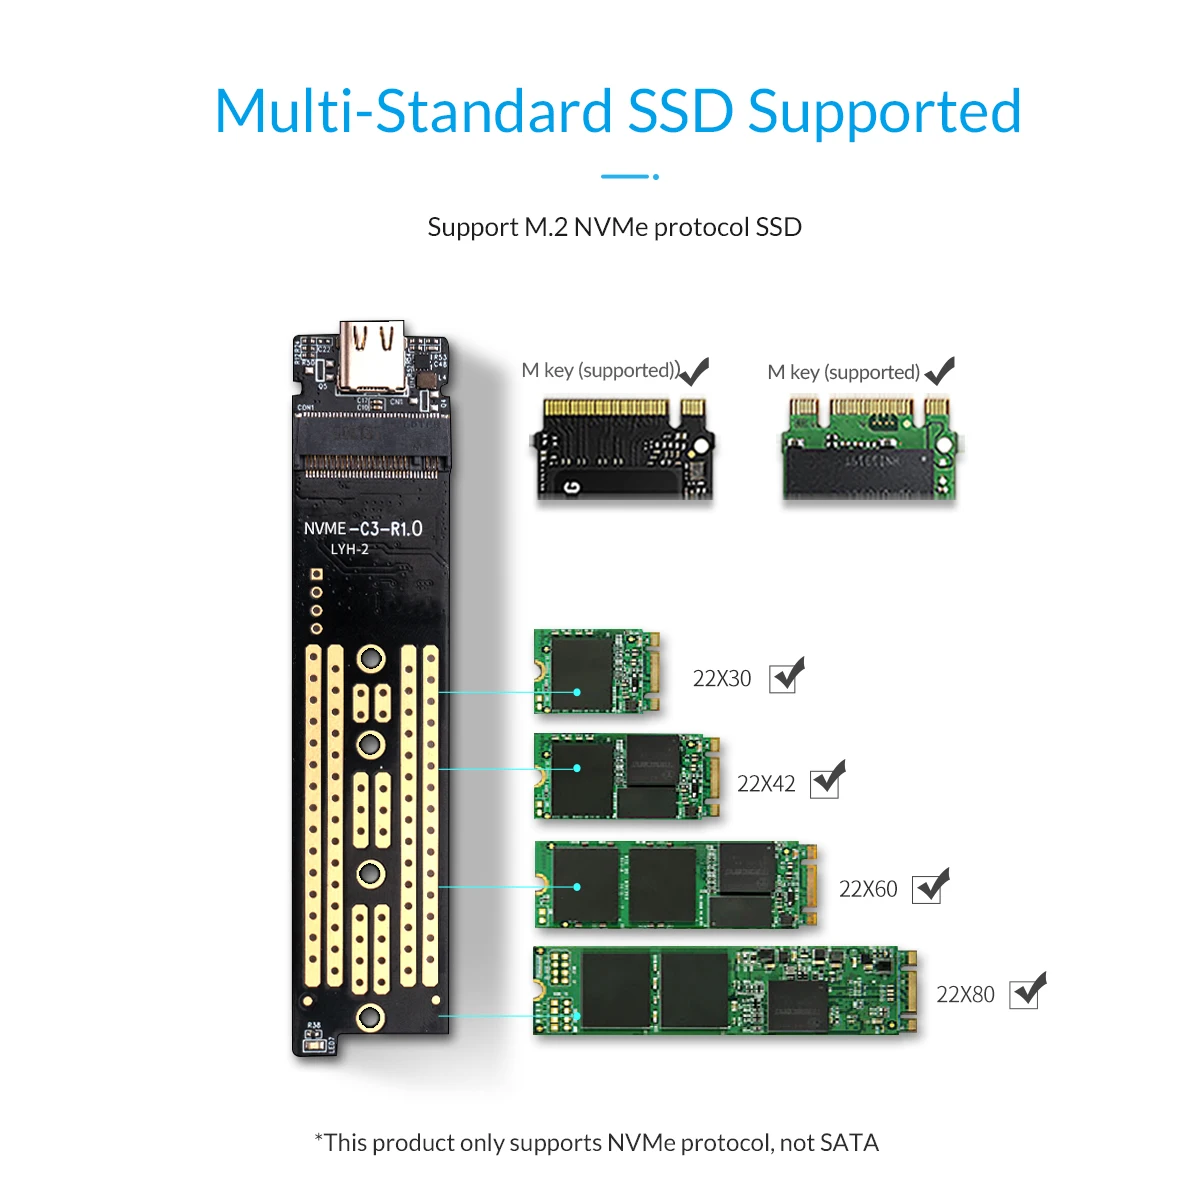 Чехол ORICO Nvme NGFF M.2 SSD 10 Гбит/с USB C жесткий диск корпус с кабелем type-C поддержка UASP отделка Поддержка Функция Smart Sleep